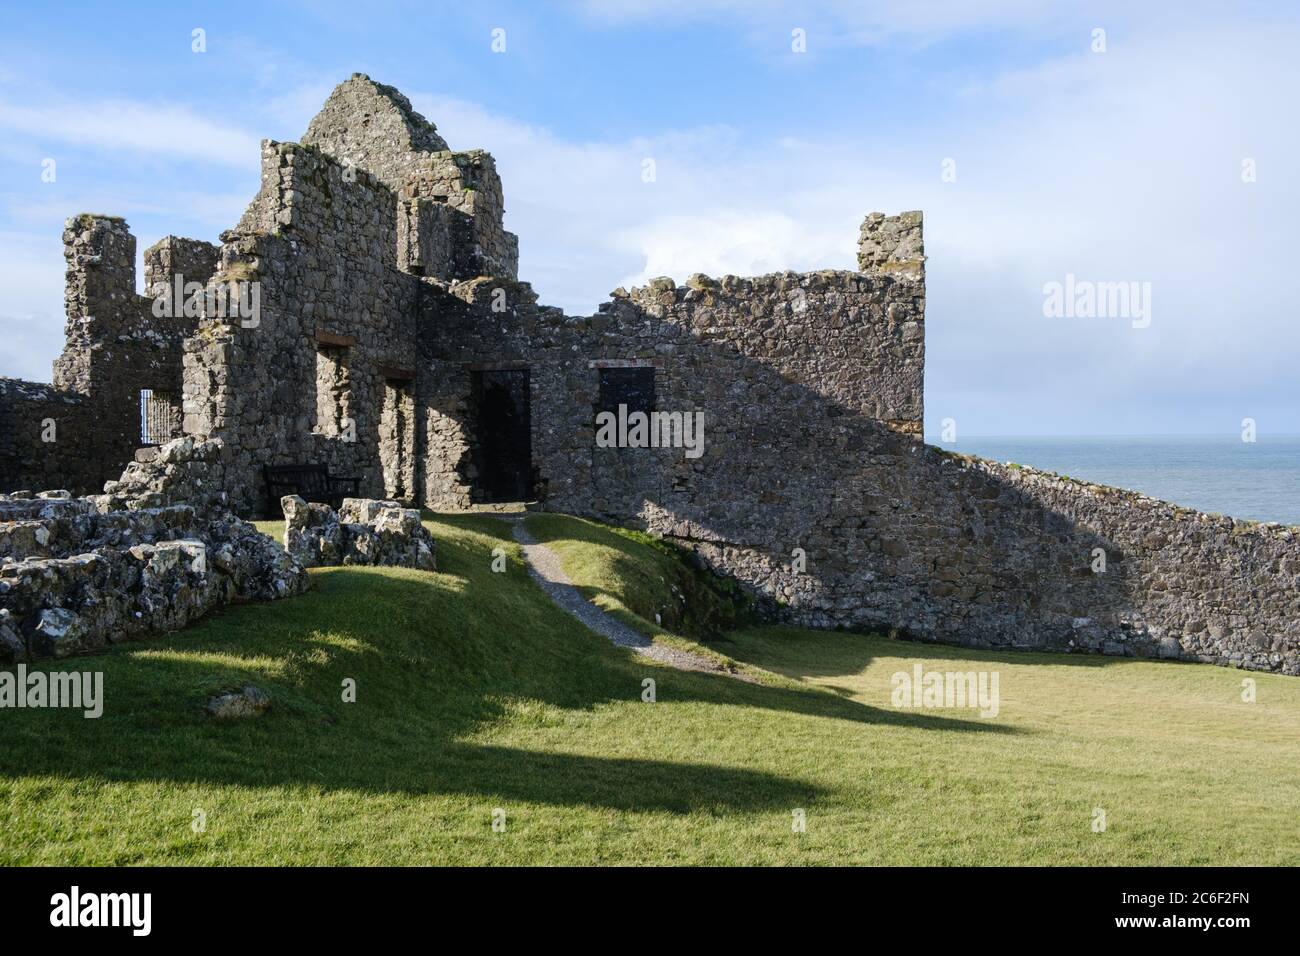 Dunluce Castle ruins against a beautiful light blue sky, set in lush green grass, near Portrush in Co. Antrim, Northern Ireland. Stock Photo